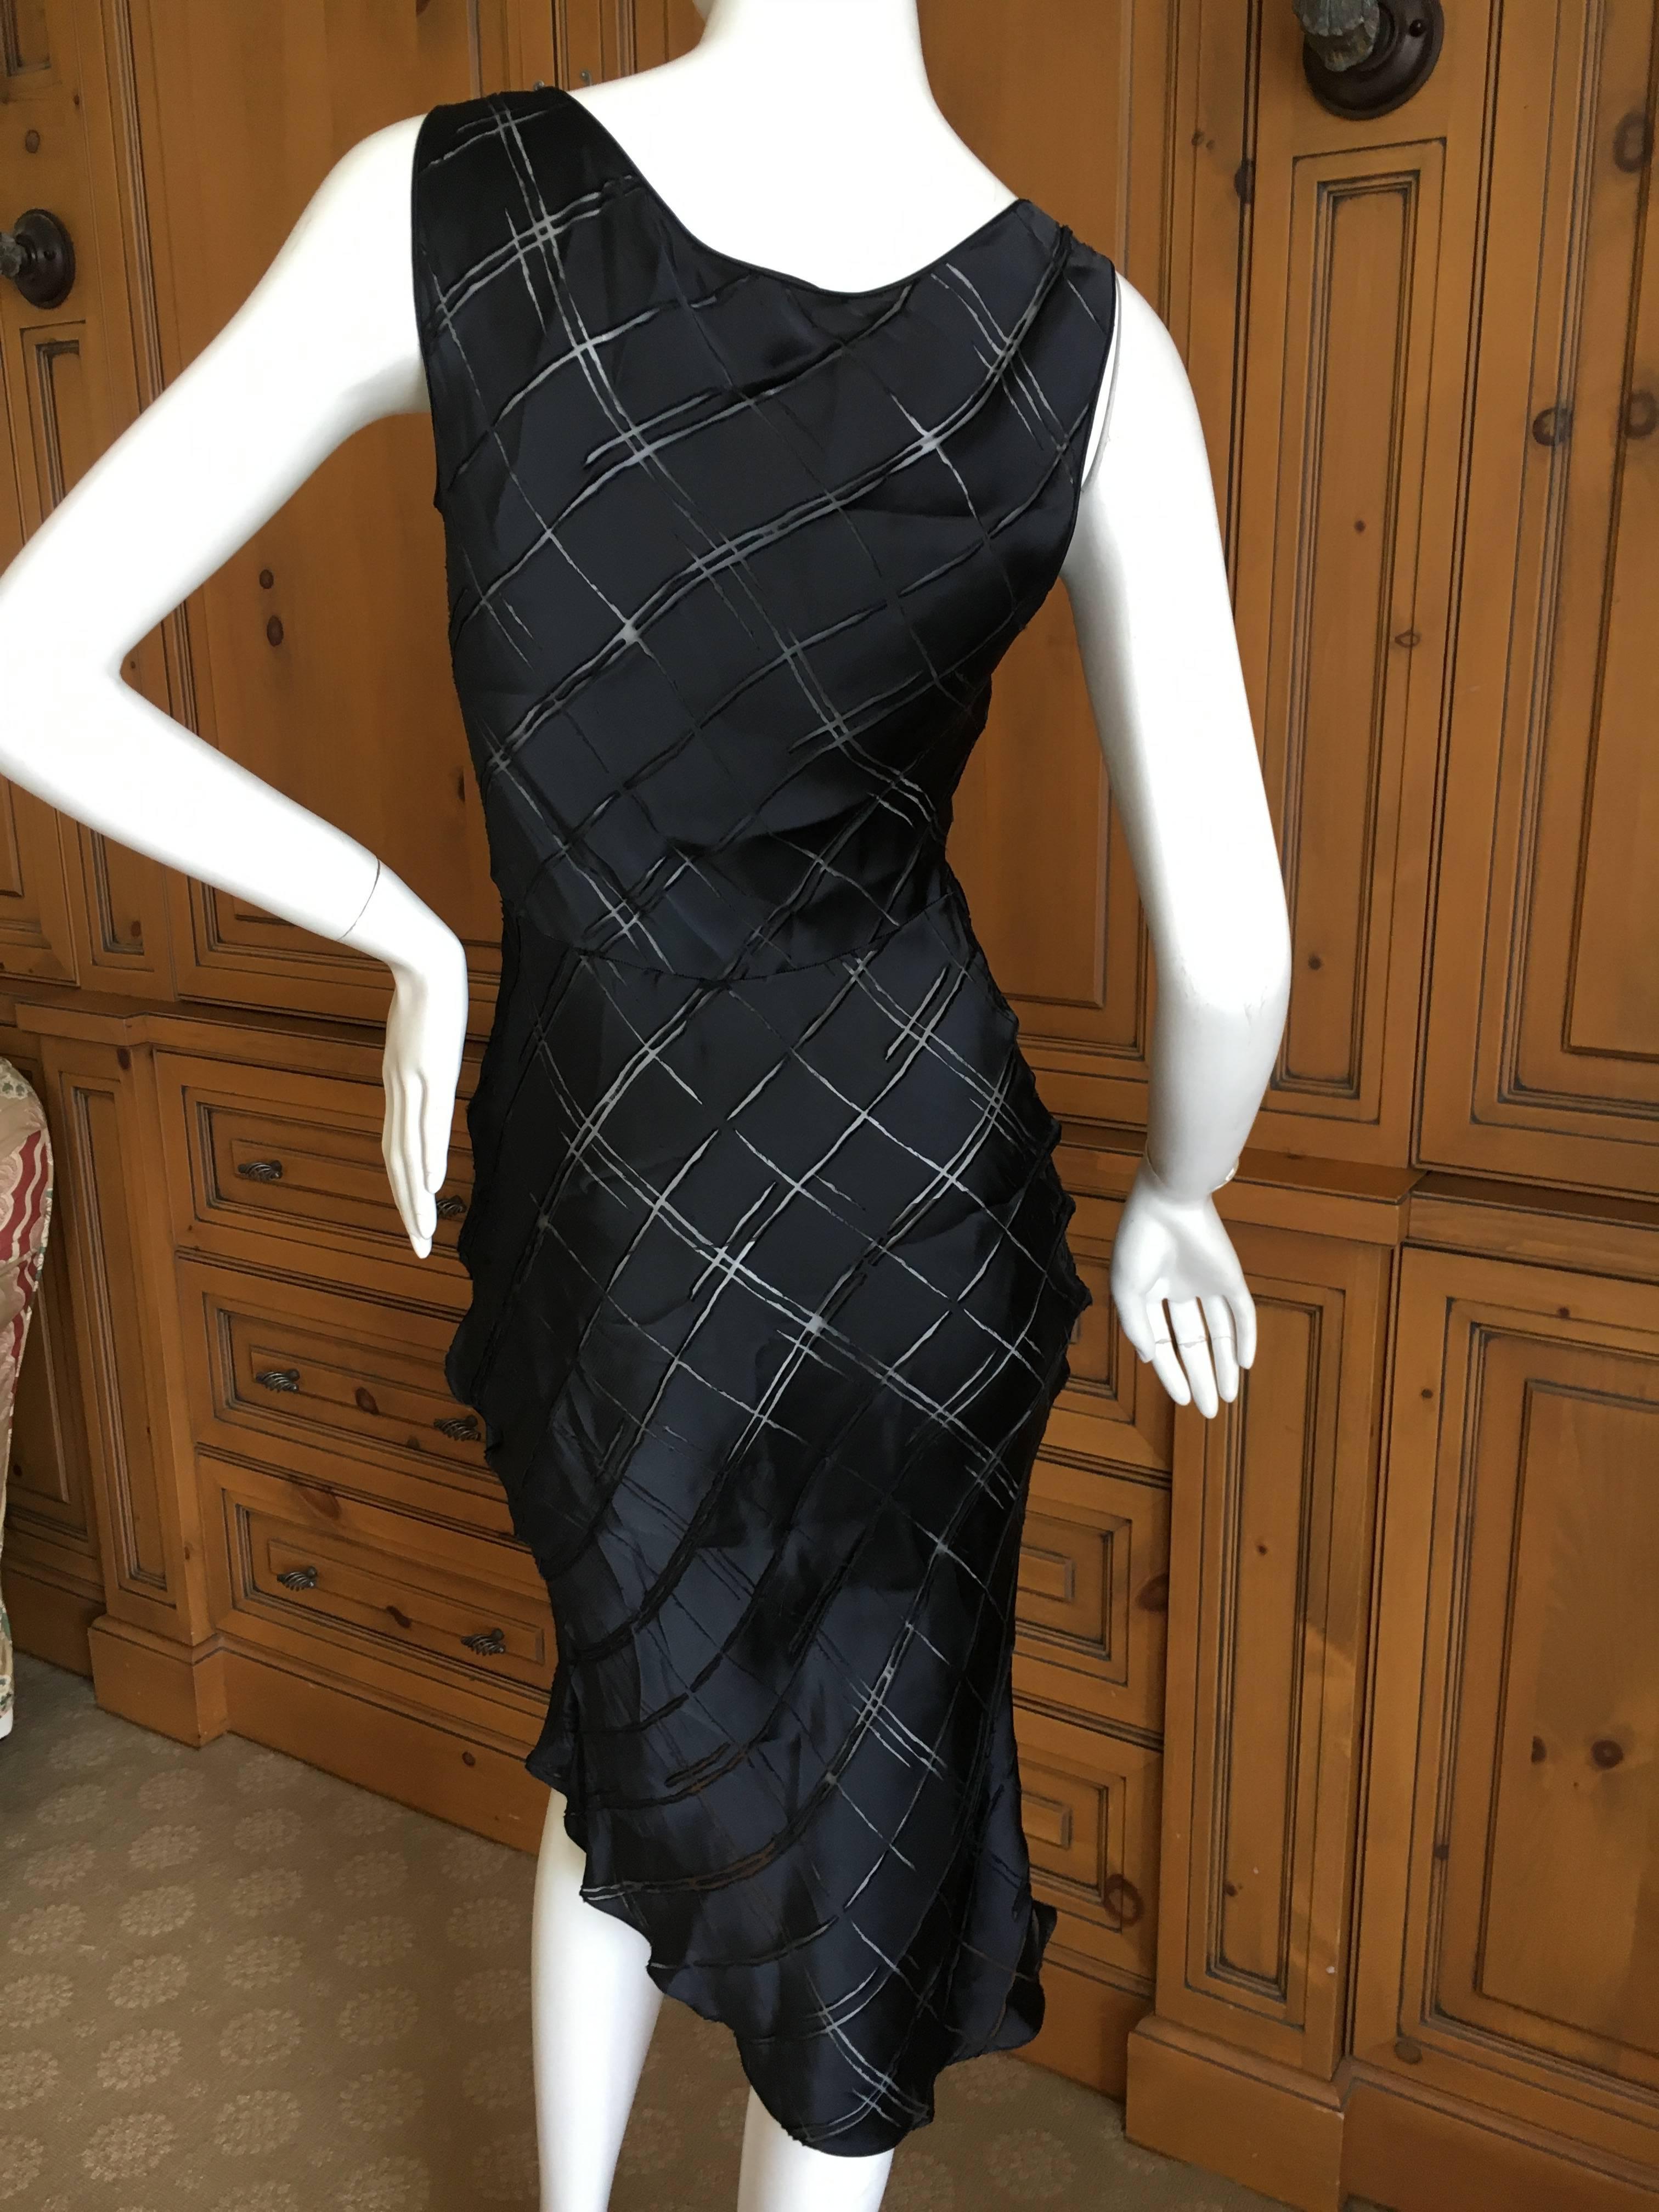 John Galliano Late 80's Silk Blend Sheer Little Black Dress
Silk viscose blend
Size 38
Measurements to follow